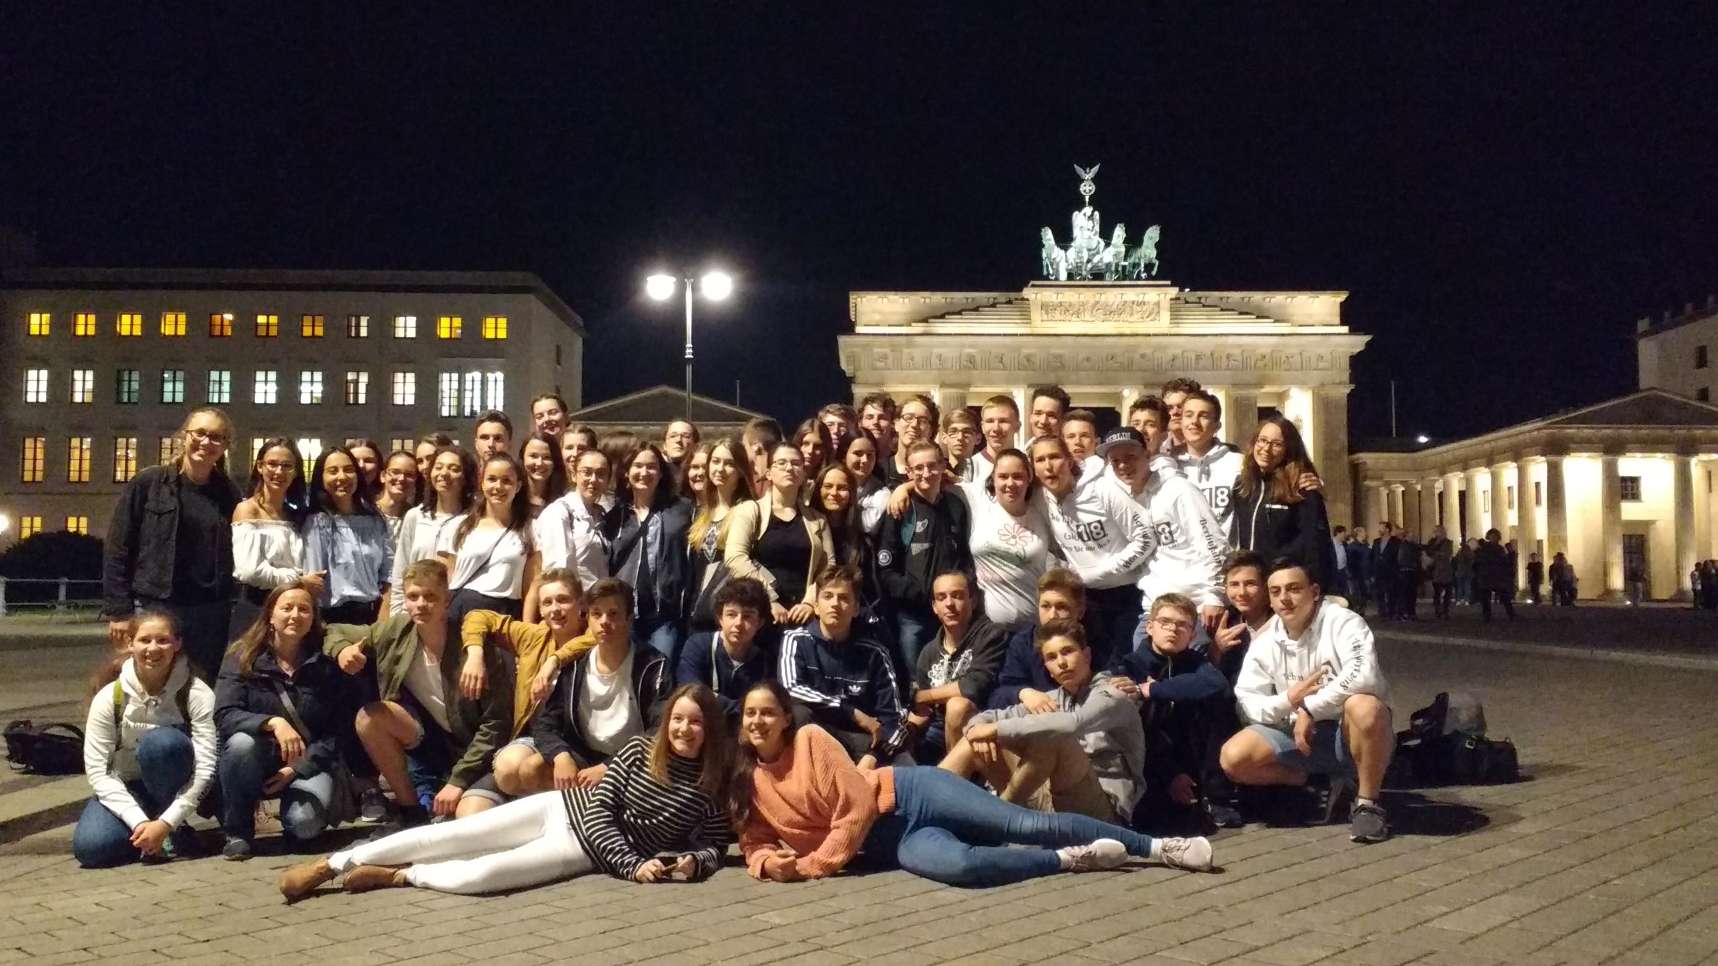 
    
            
                    Gruppenfoto am Brandenburger Tor
                
        
